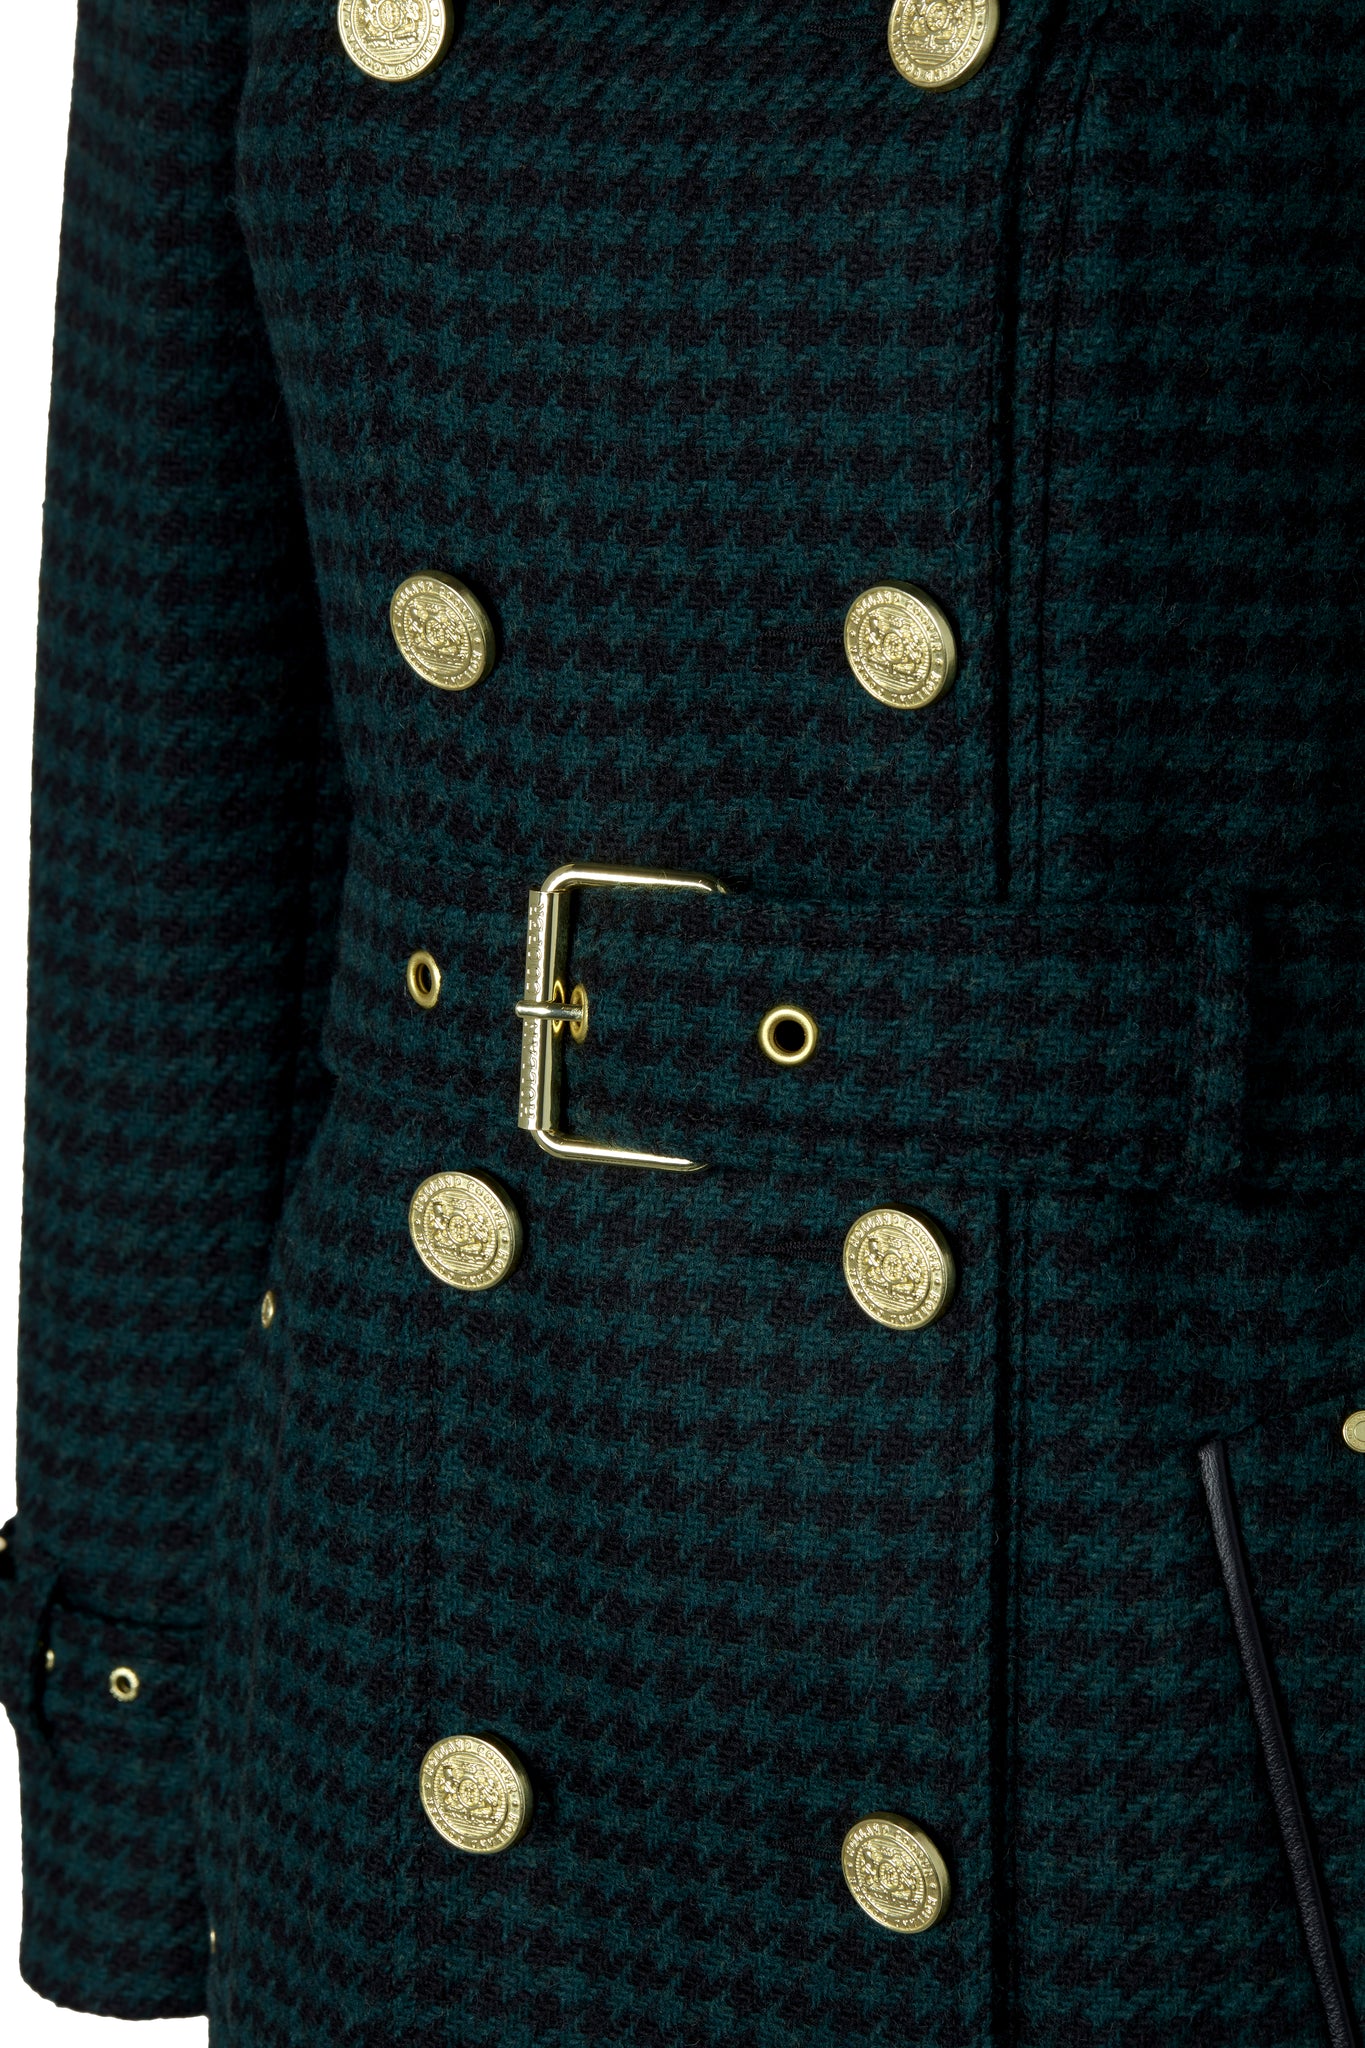 Full Length Marlborough Trench Coat (Emerald Houndstooth)